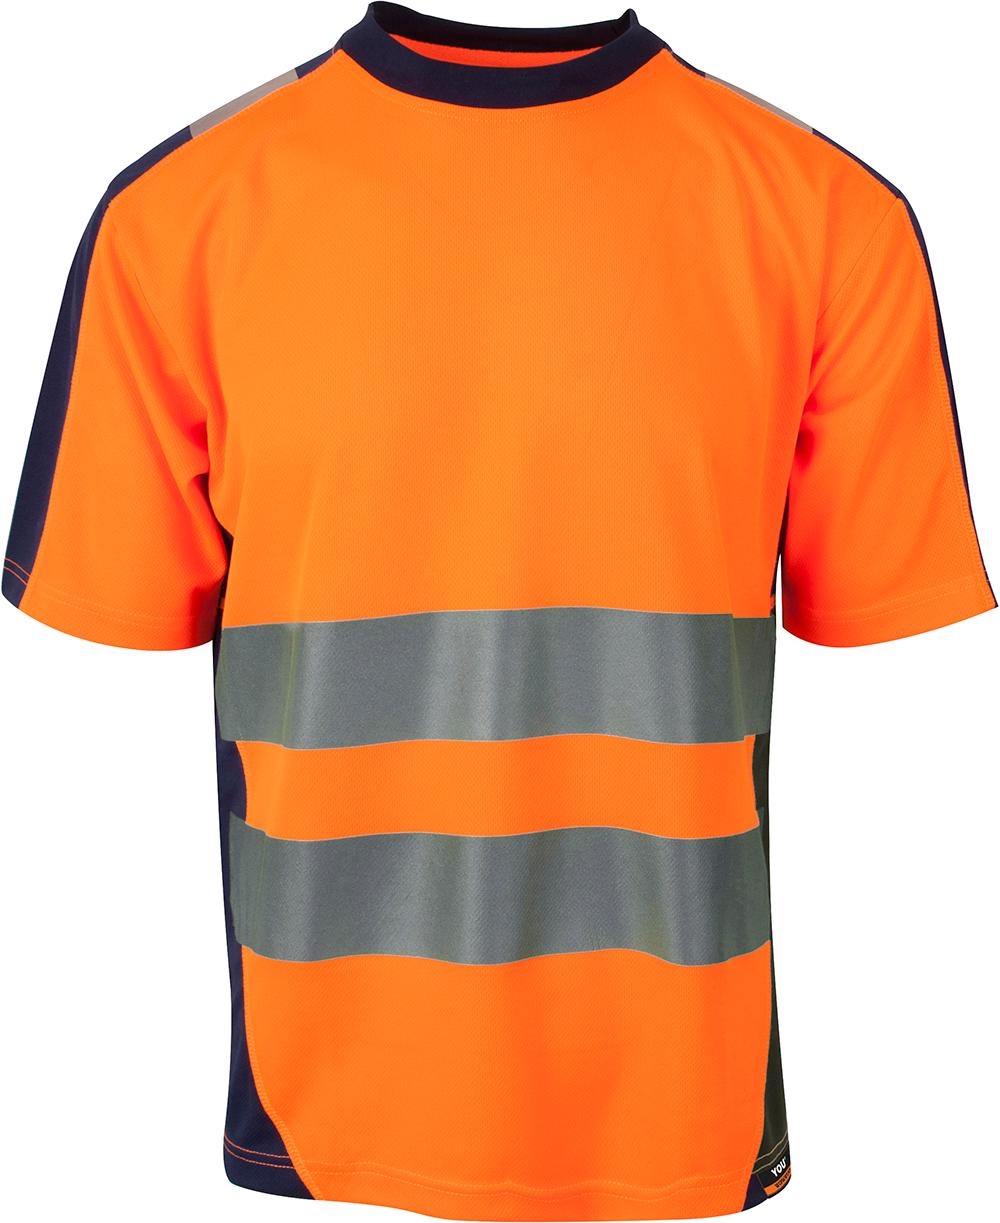 4694 Mora Safety Orange